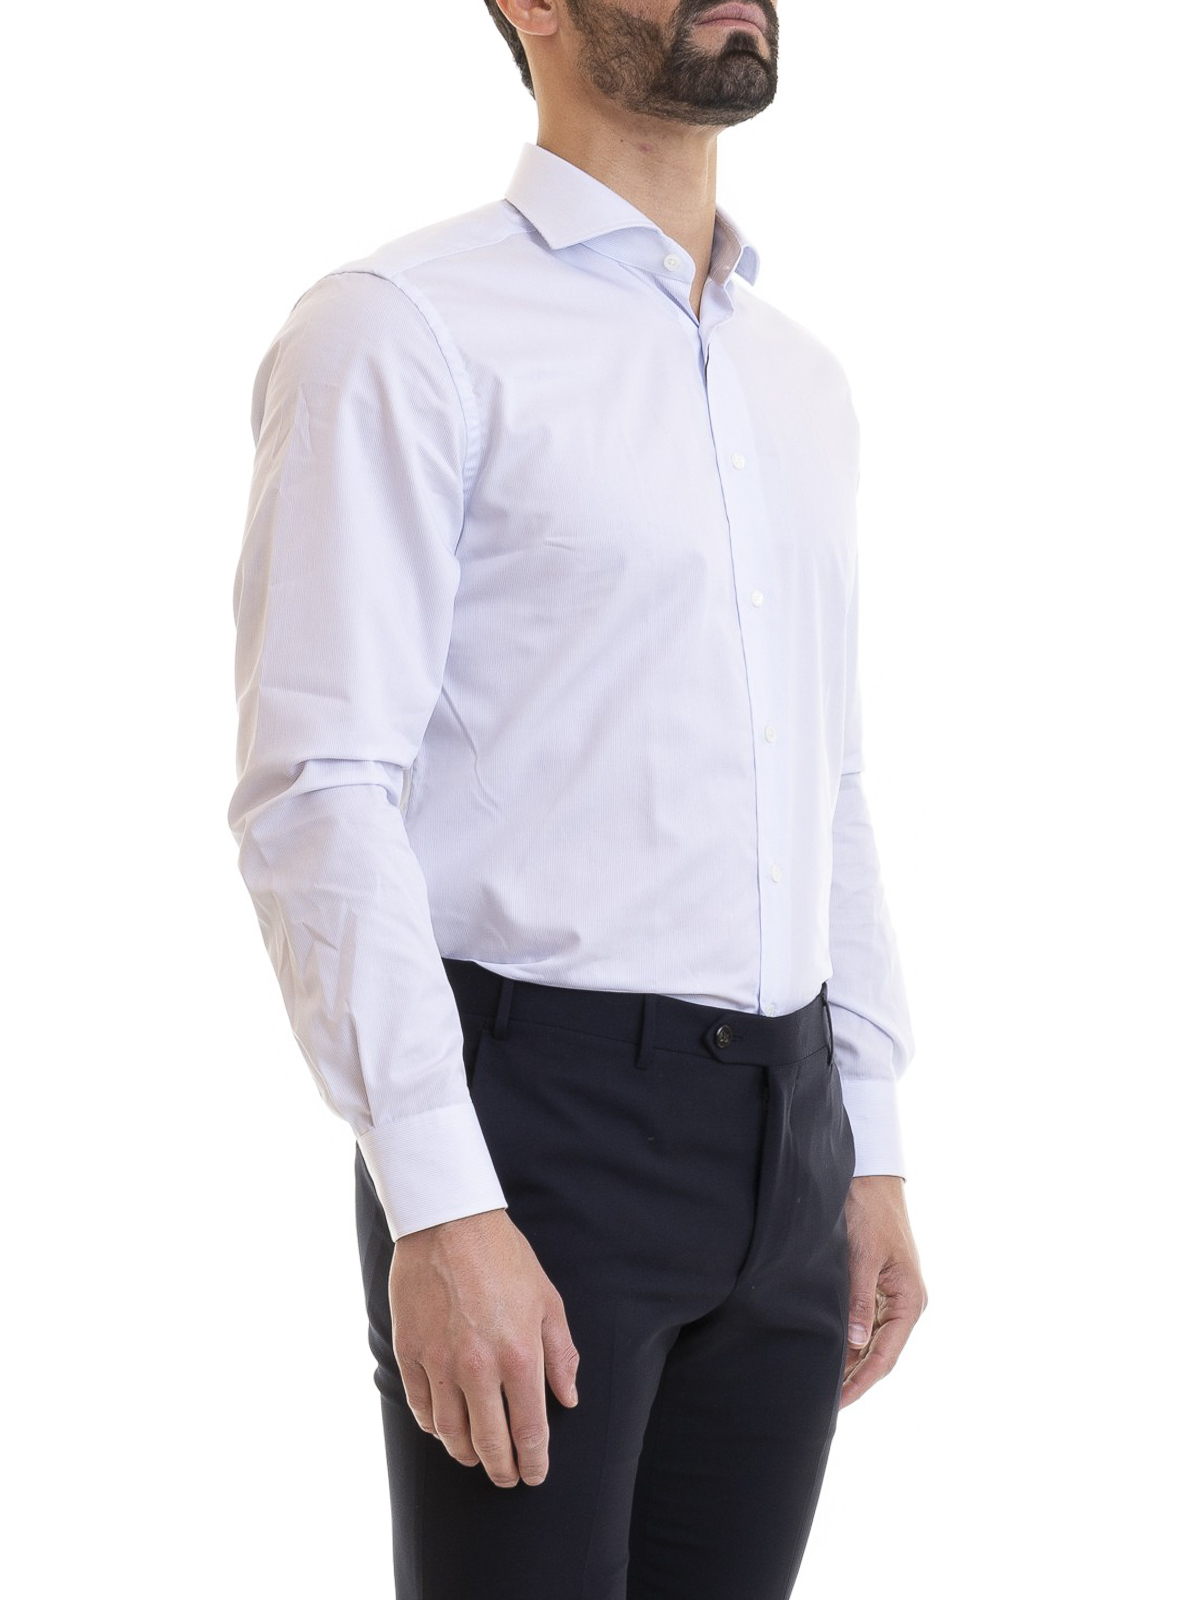 Vermindering essence symbool Shirts Corneliani - Light blue striped cotton shirt - 83P1029111294005